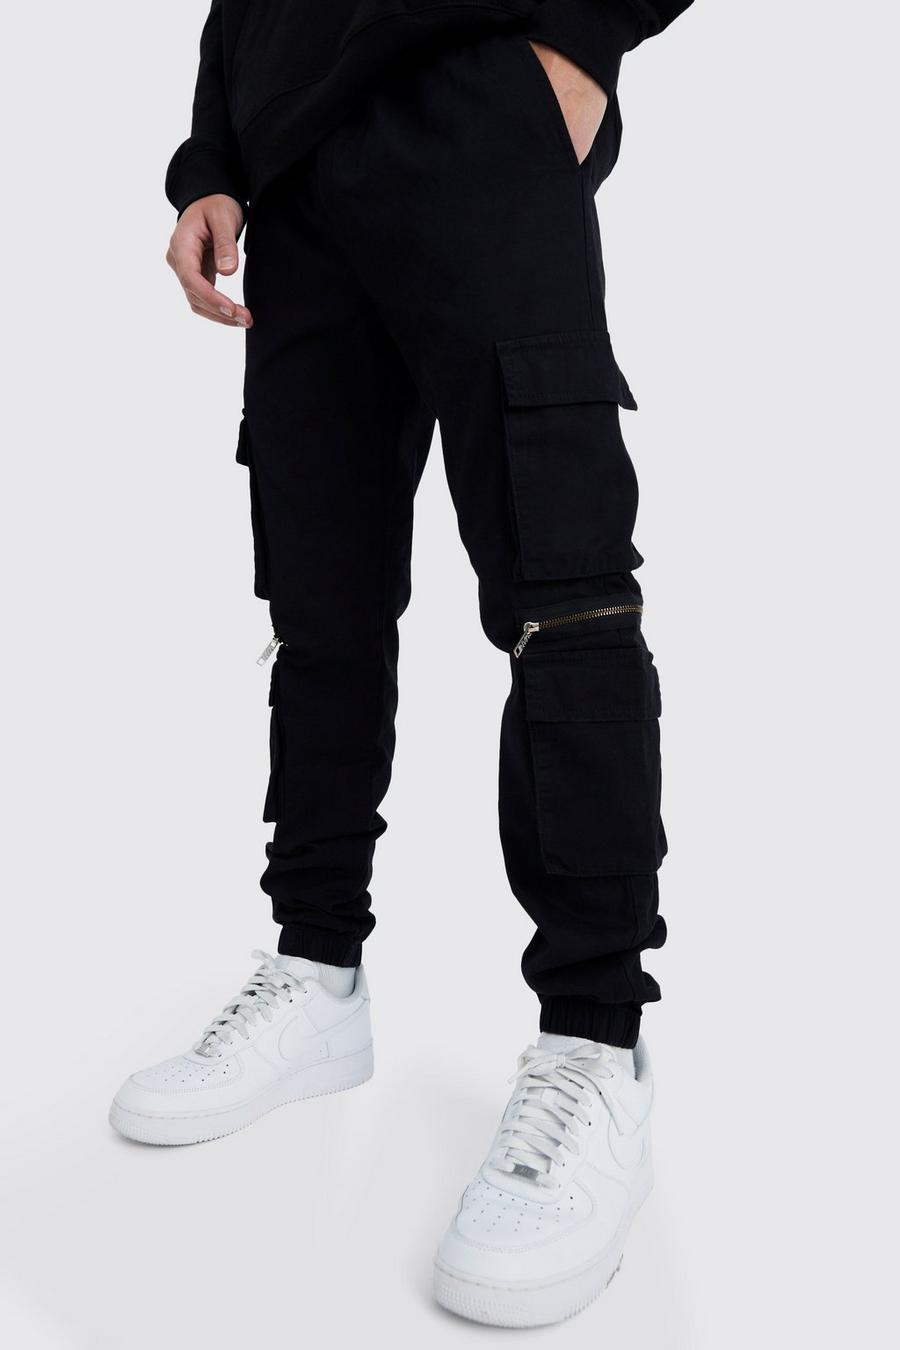 Black Elasticated Waist Multi Pocket Zip Cargo Trouser